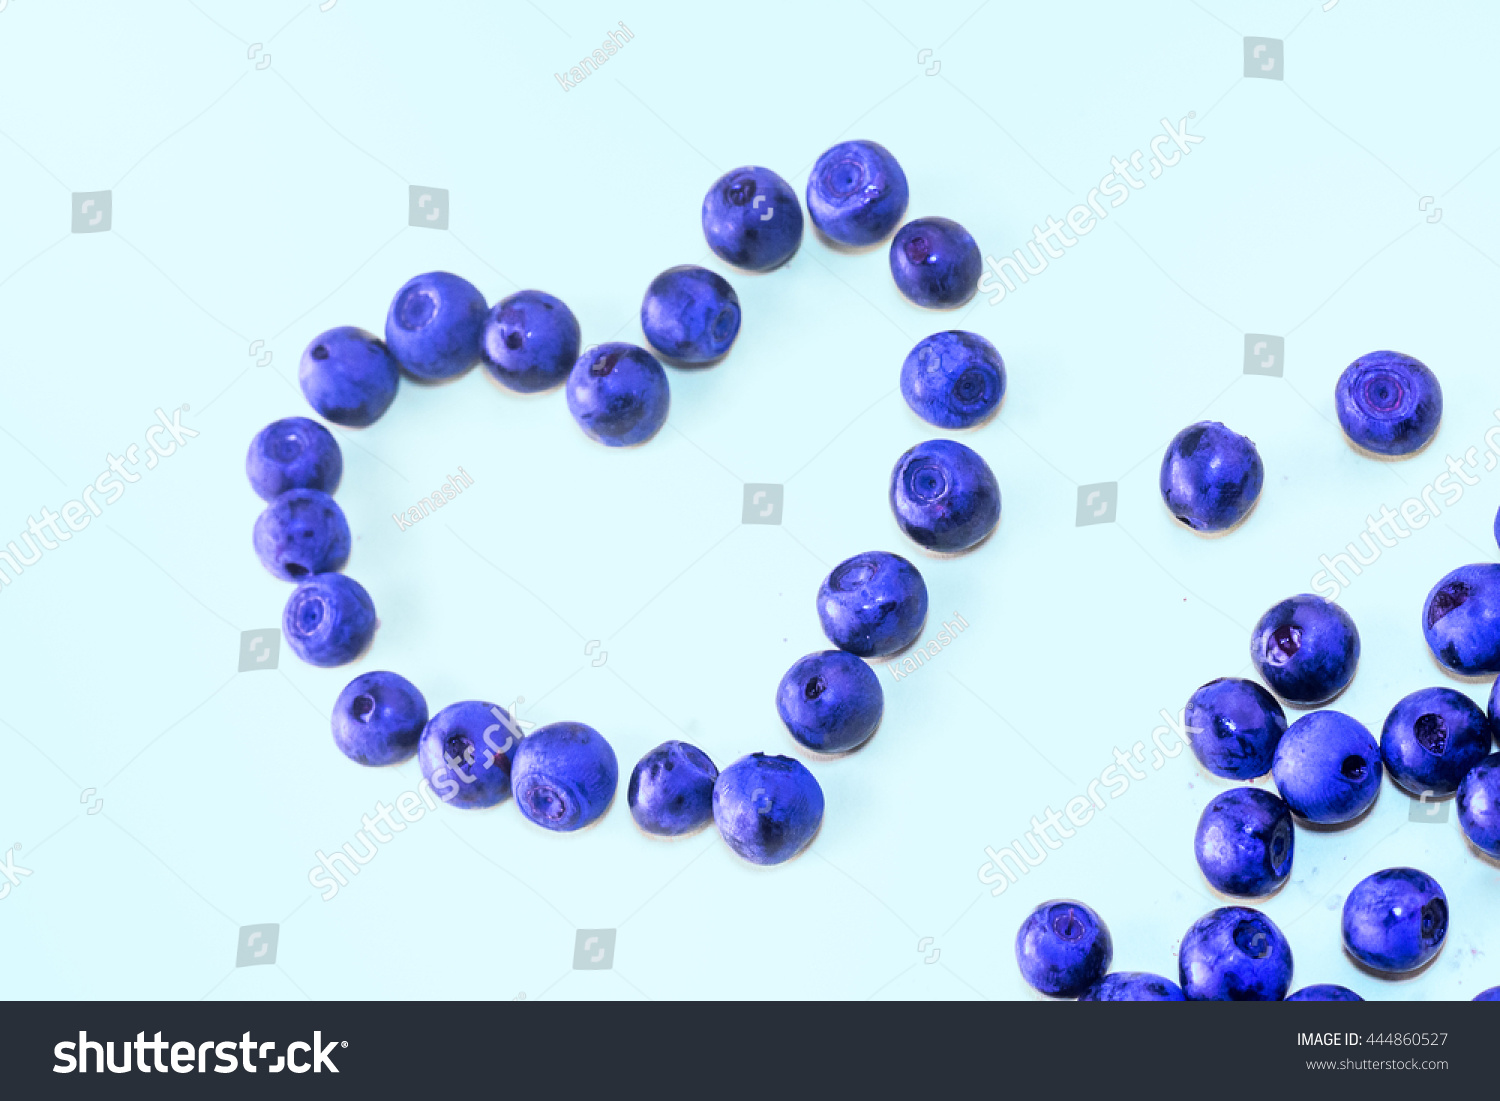 Blueberry - heart shape, fresh colors #444860527